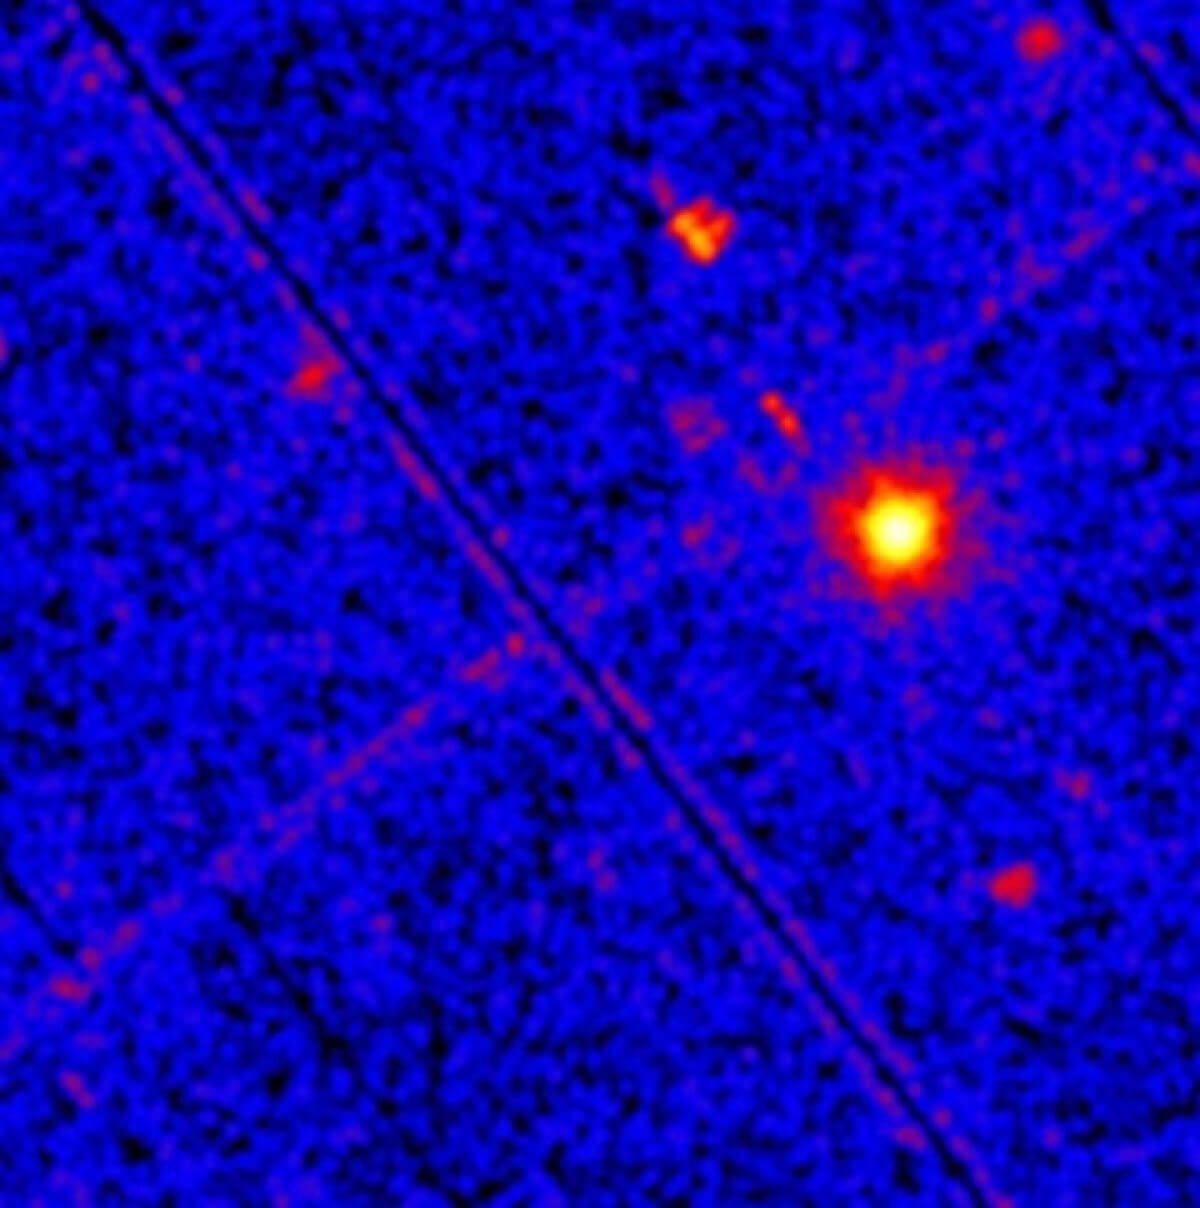 XMM-Newton/EPIC-pn observation of quasar J1144